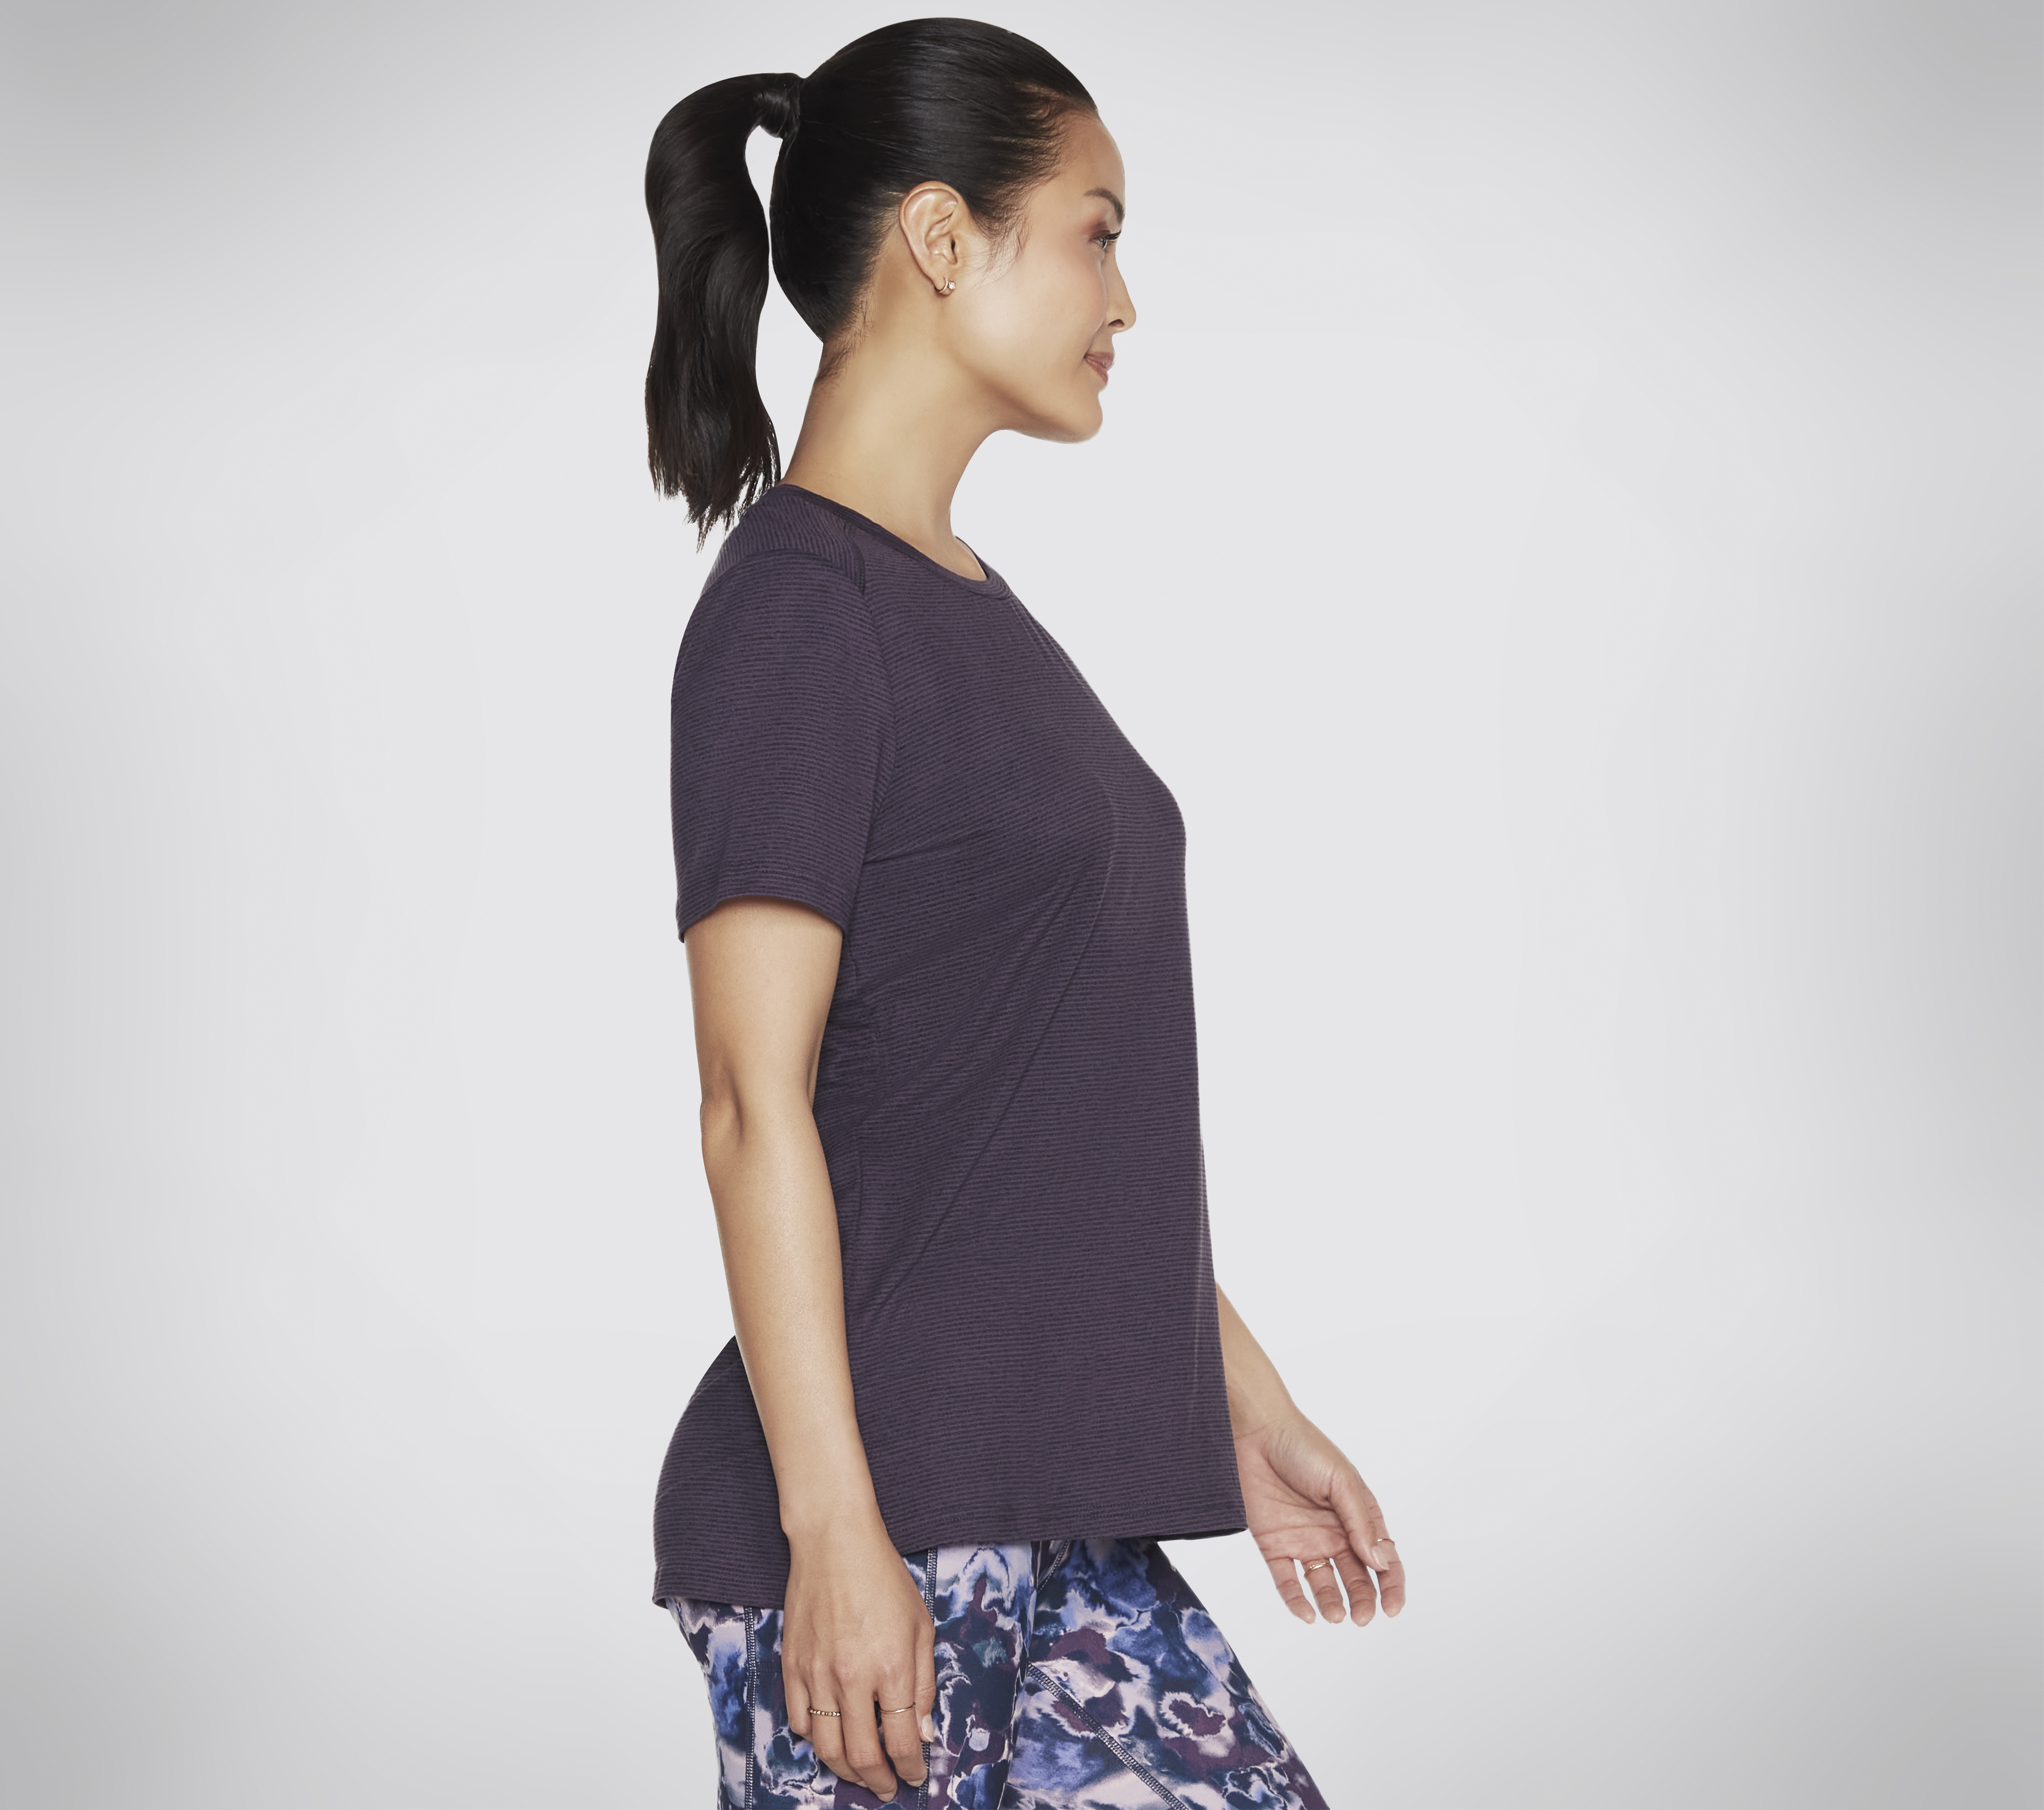 Skechers Godri Stride Long Sleeve (Teal) Women's Clothing - ShopStyle  Activewear Tops